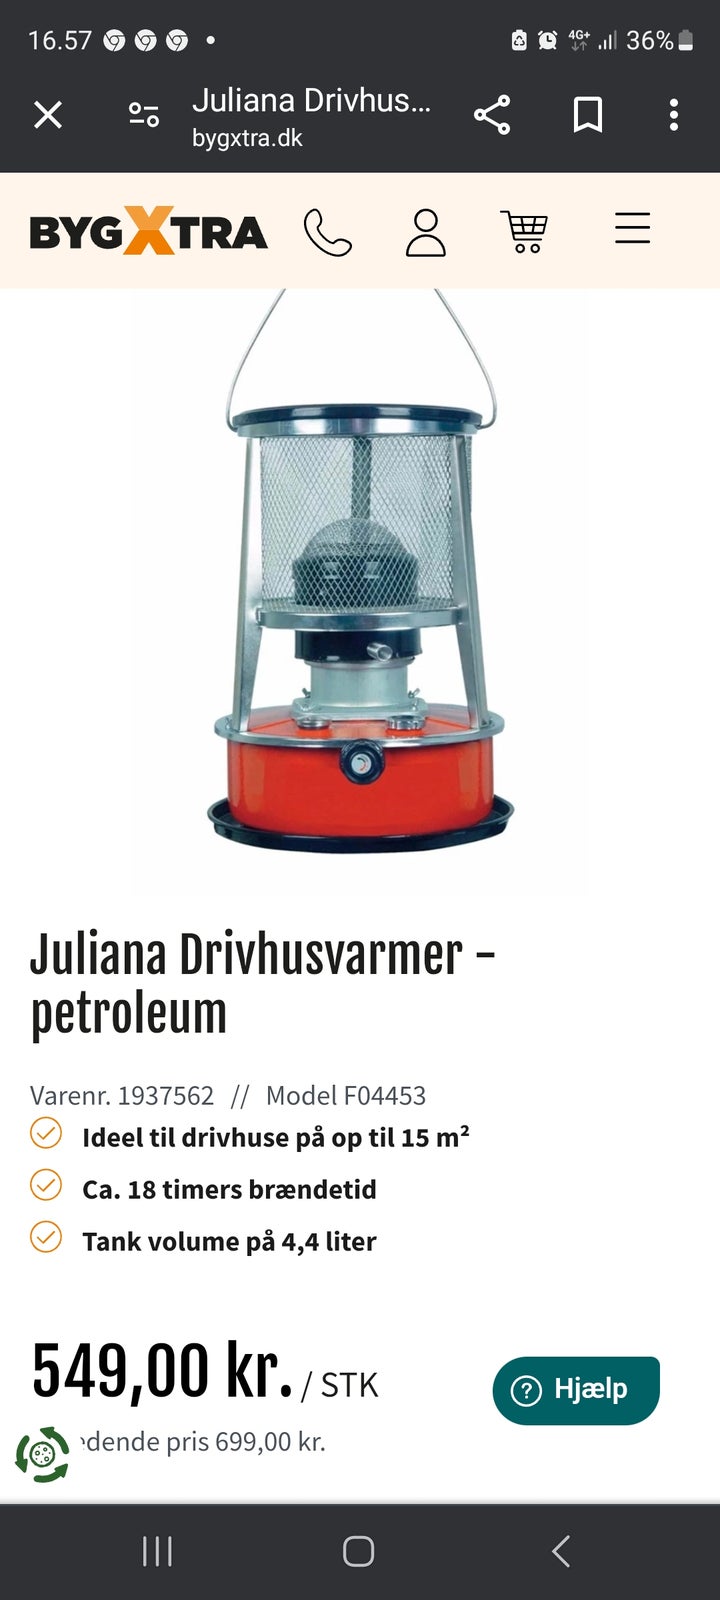 Andet, Juliana Drivhusvarmer - petroleum